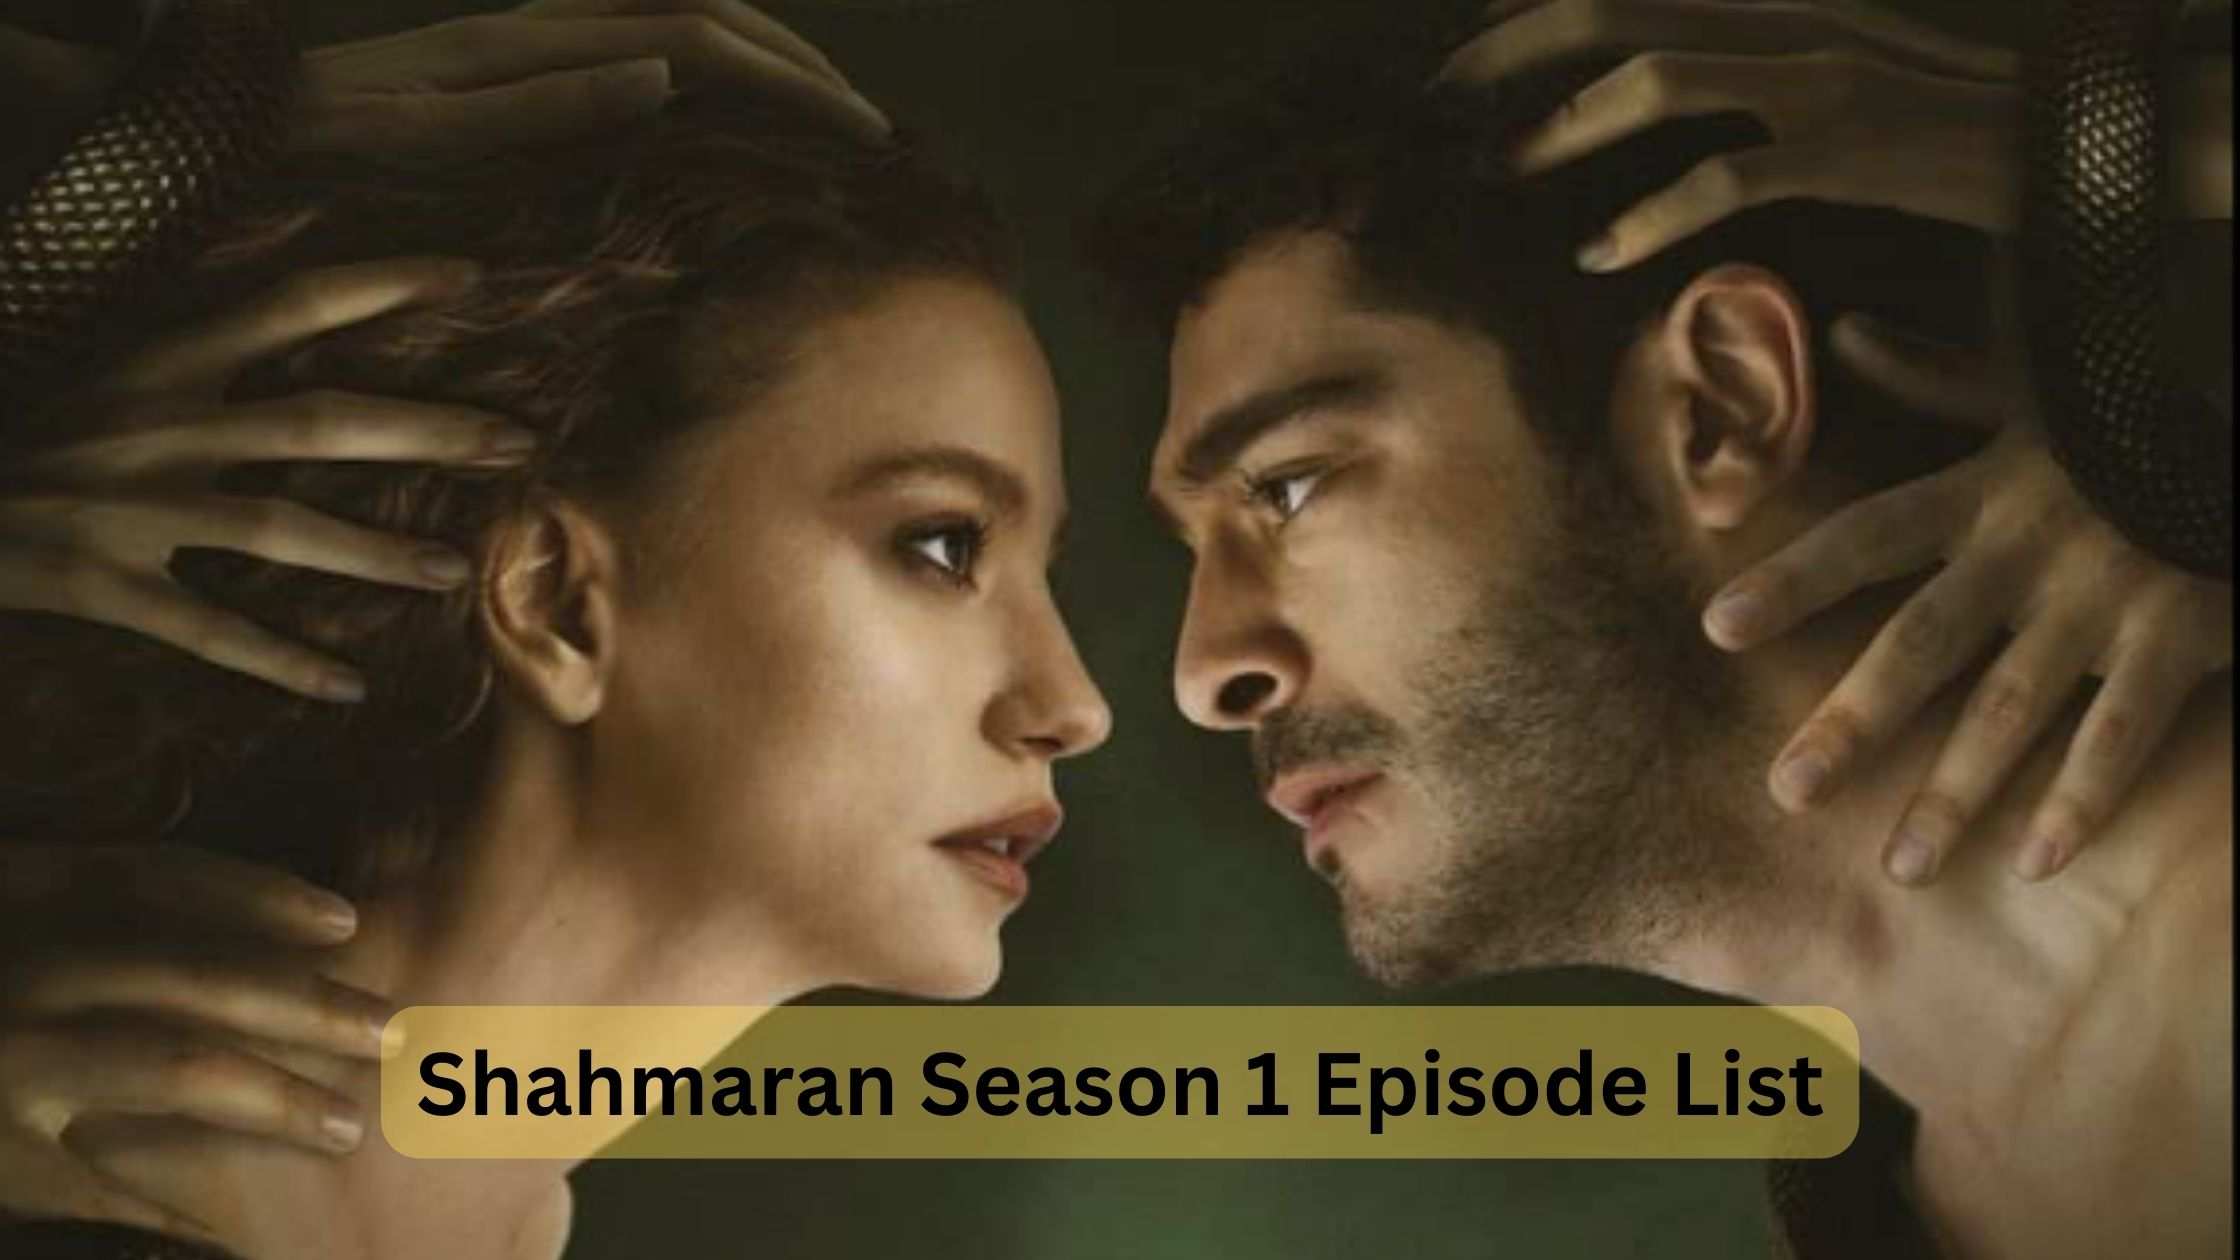 shahmaran season 1 Episode list